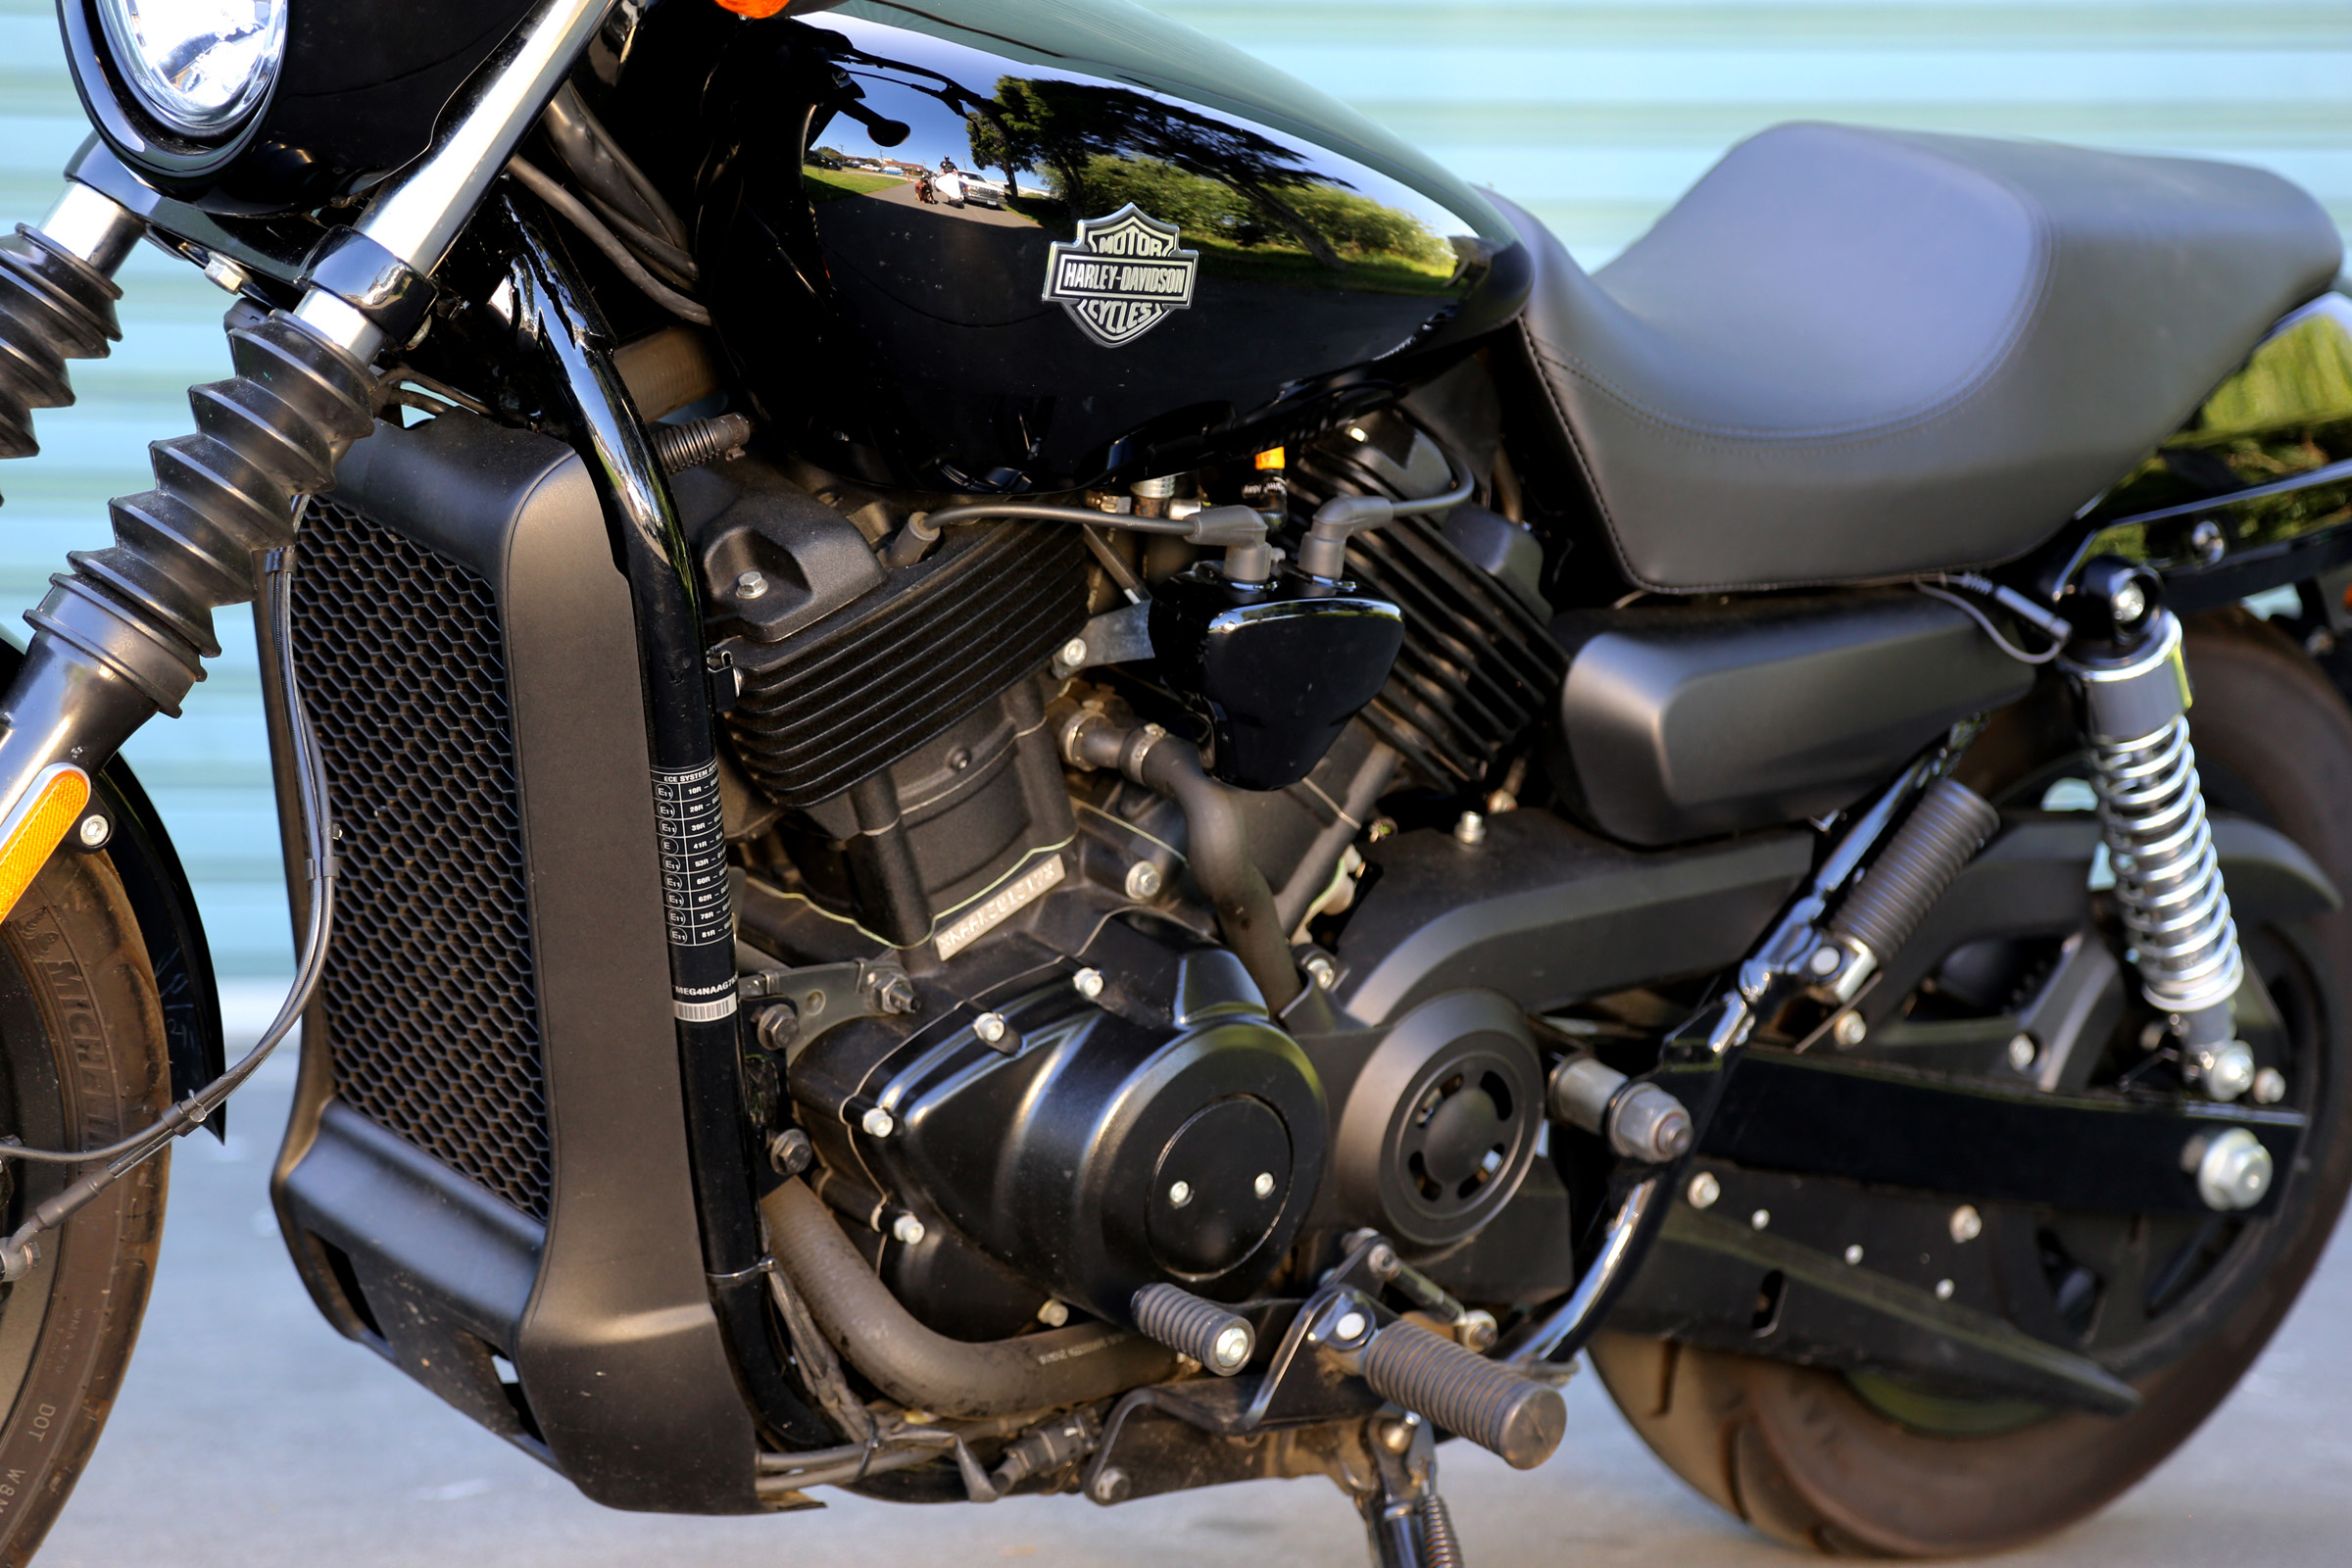 2019 Harley Davidson Street 500 XG500 detail12